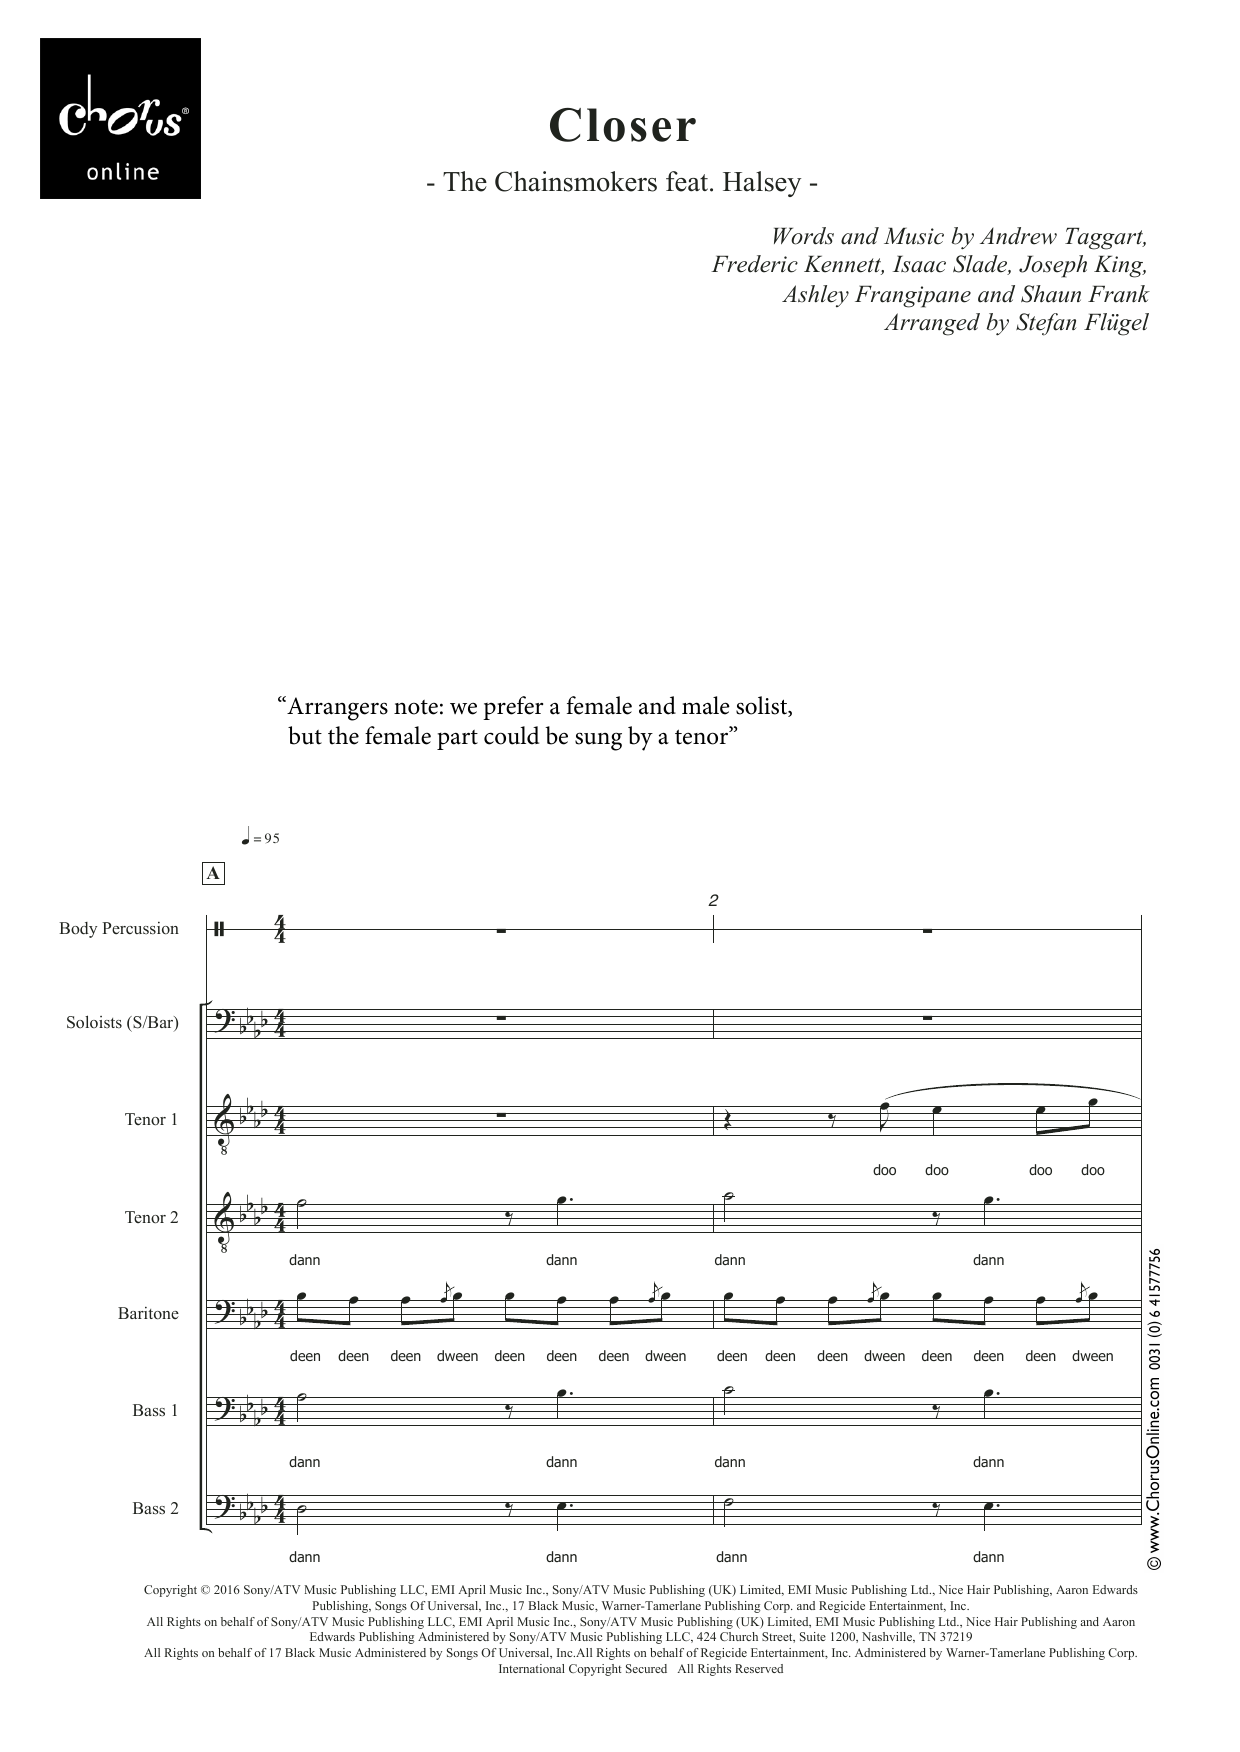 The Chainsmokers Closer (feat. Halsey) (arr. Stefan Flügel) sheet music notes printable PDF score